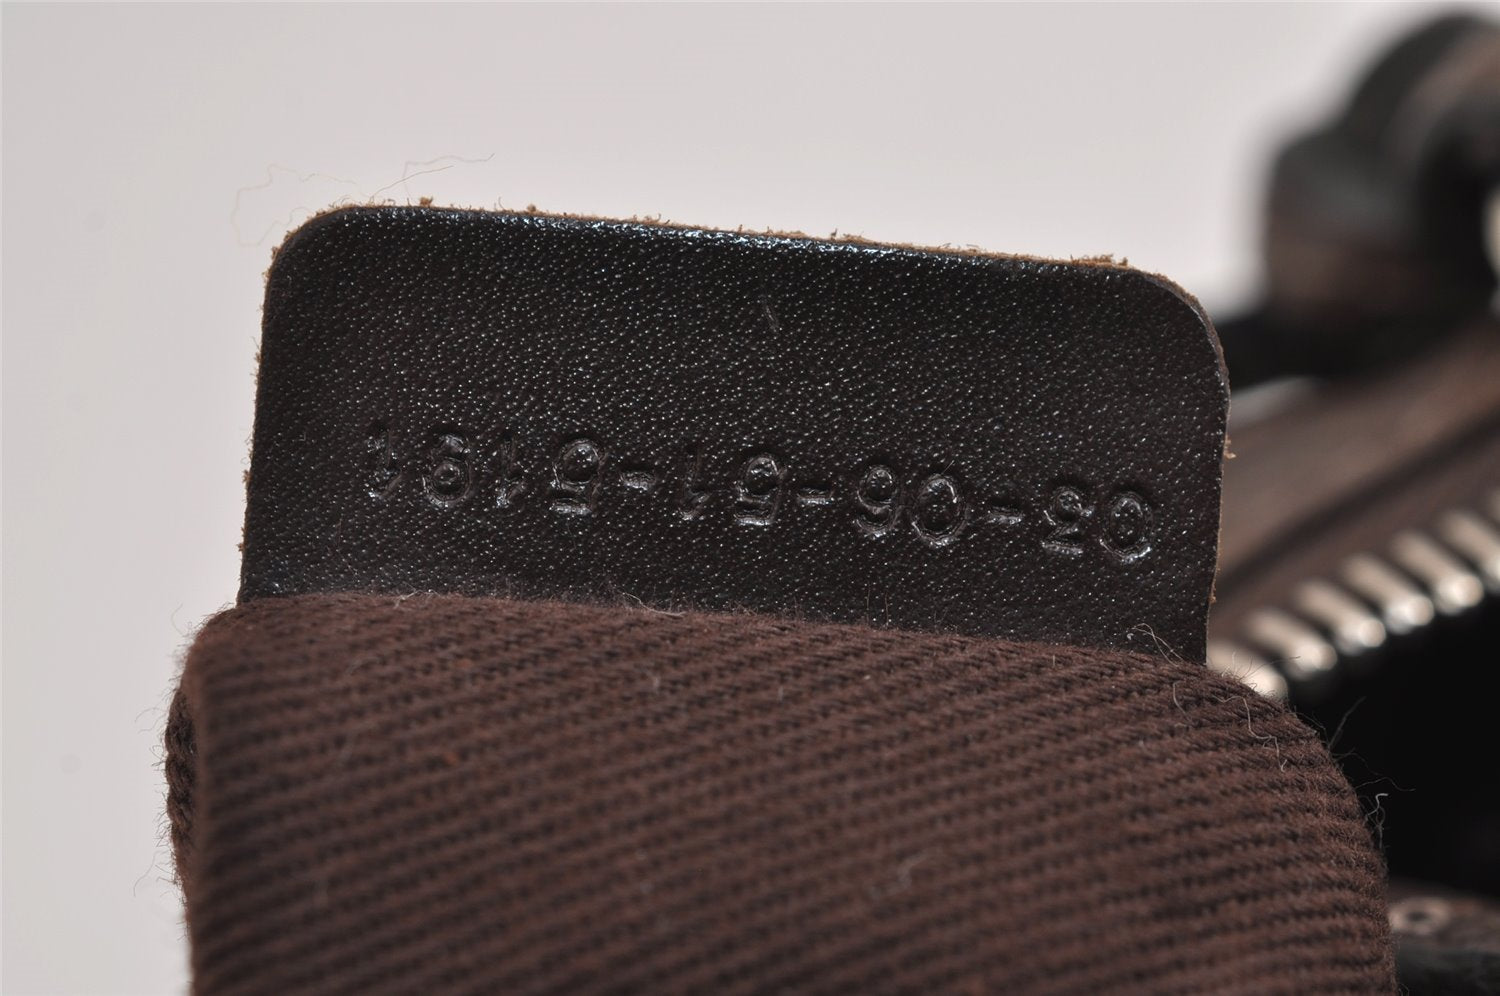 Authentic Chloe Vintage Paddington Leather Shoulder Hand Bag Brown 5067J